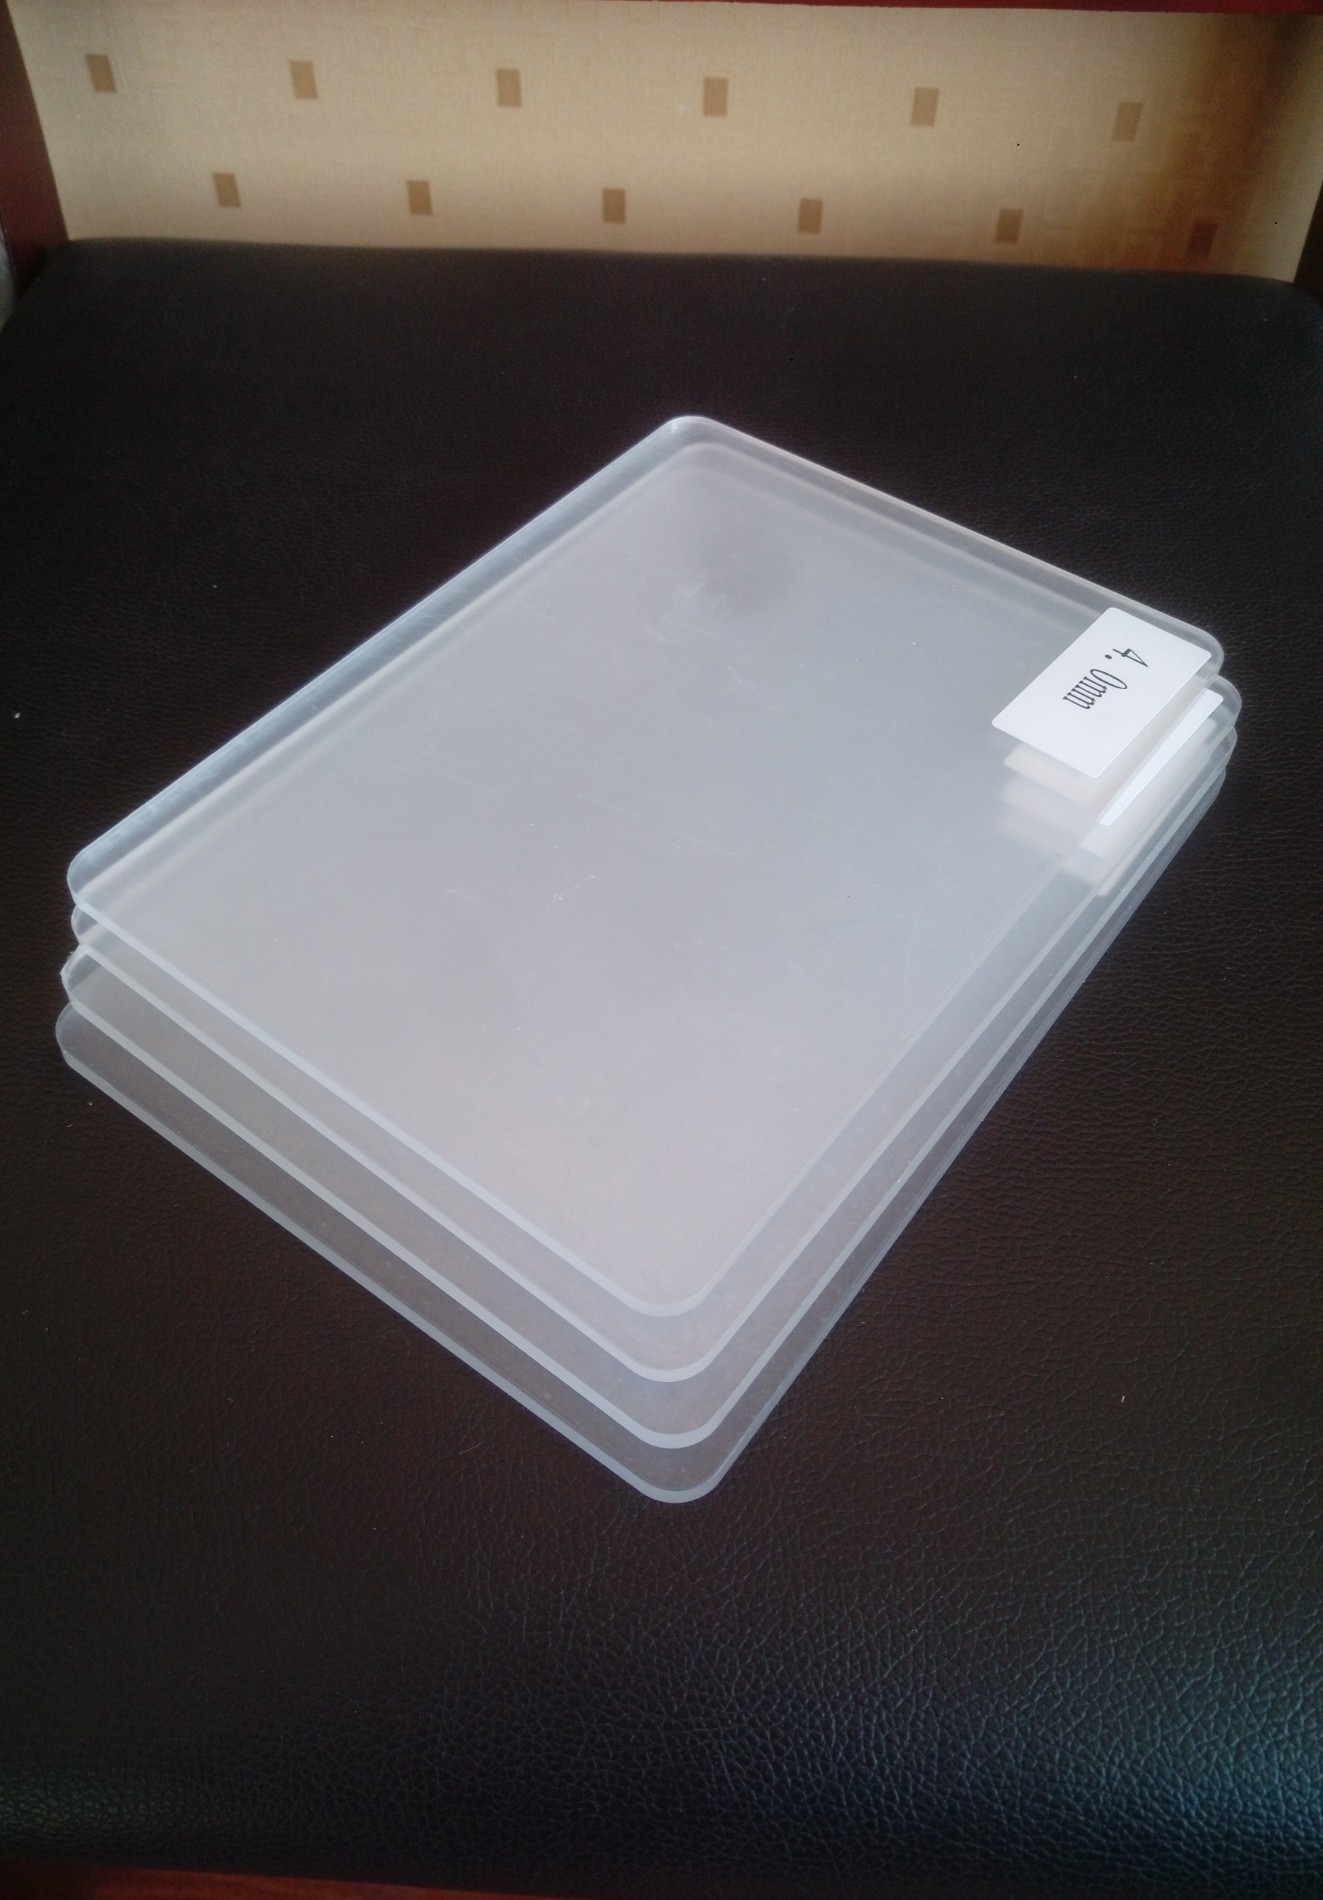 2mm thick plastic sheet 100% virgin clear acrylic plastic sheet